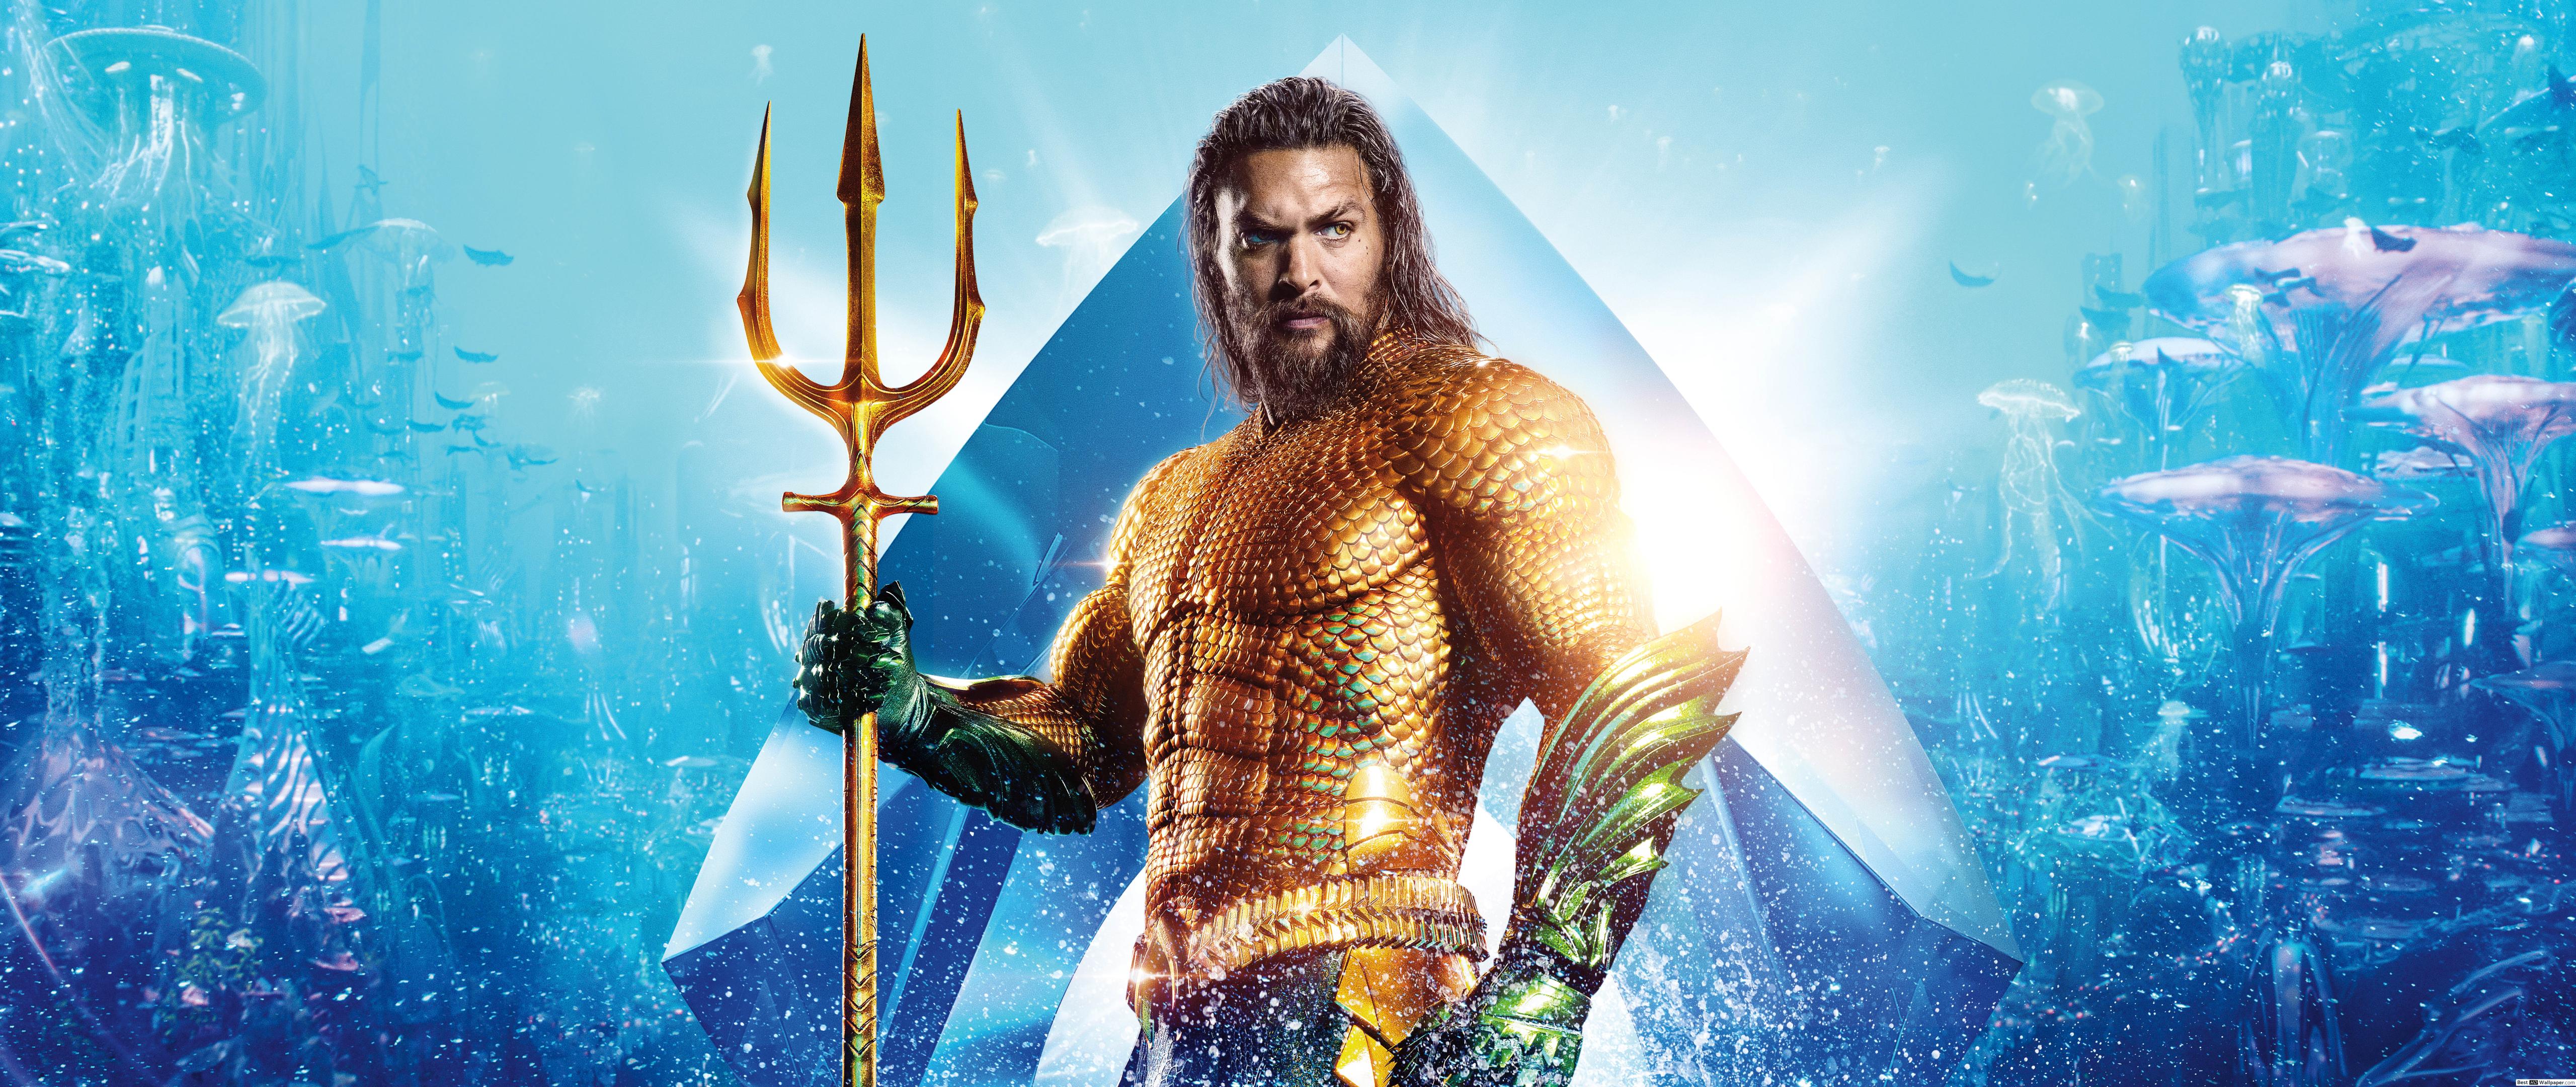 Aquaman king of Atlantis HD wallpaper download